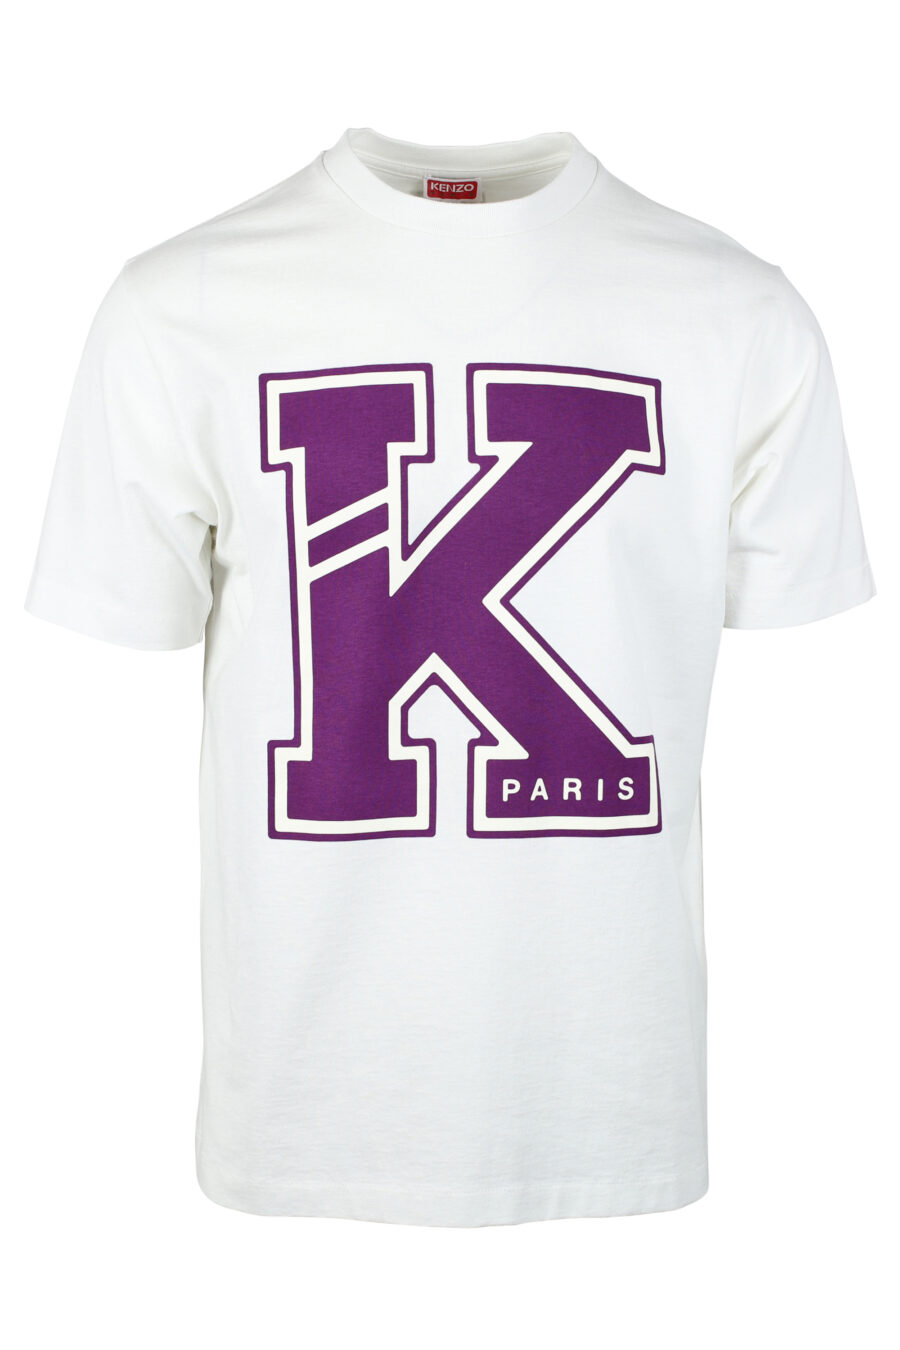 Camiseta blanca con maxilogo "K" violeta - IMG 4684